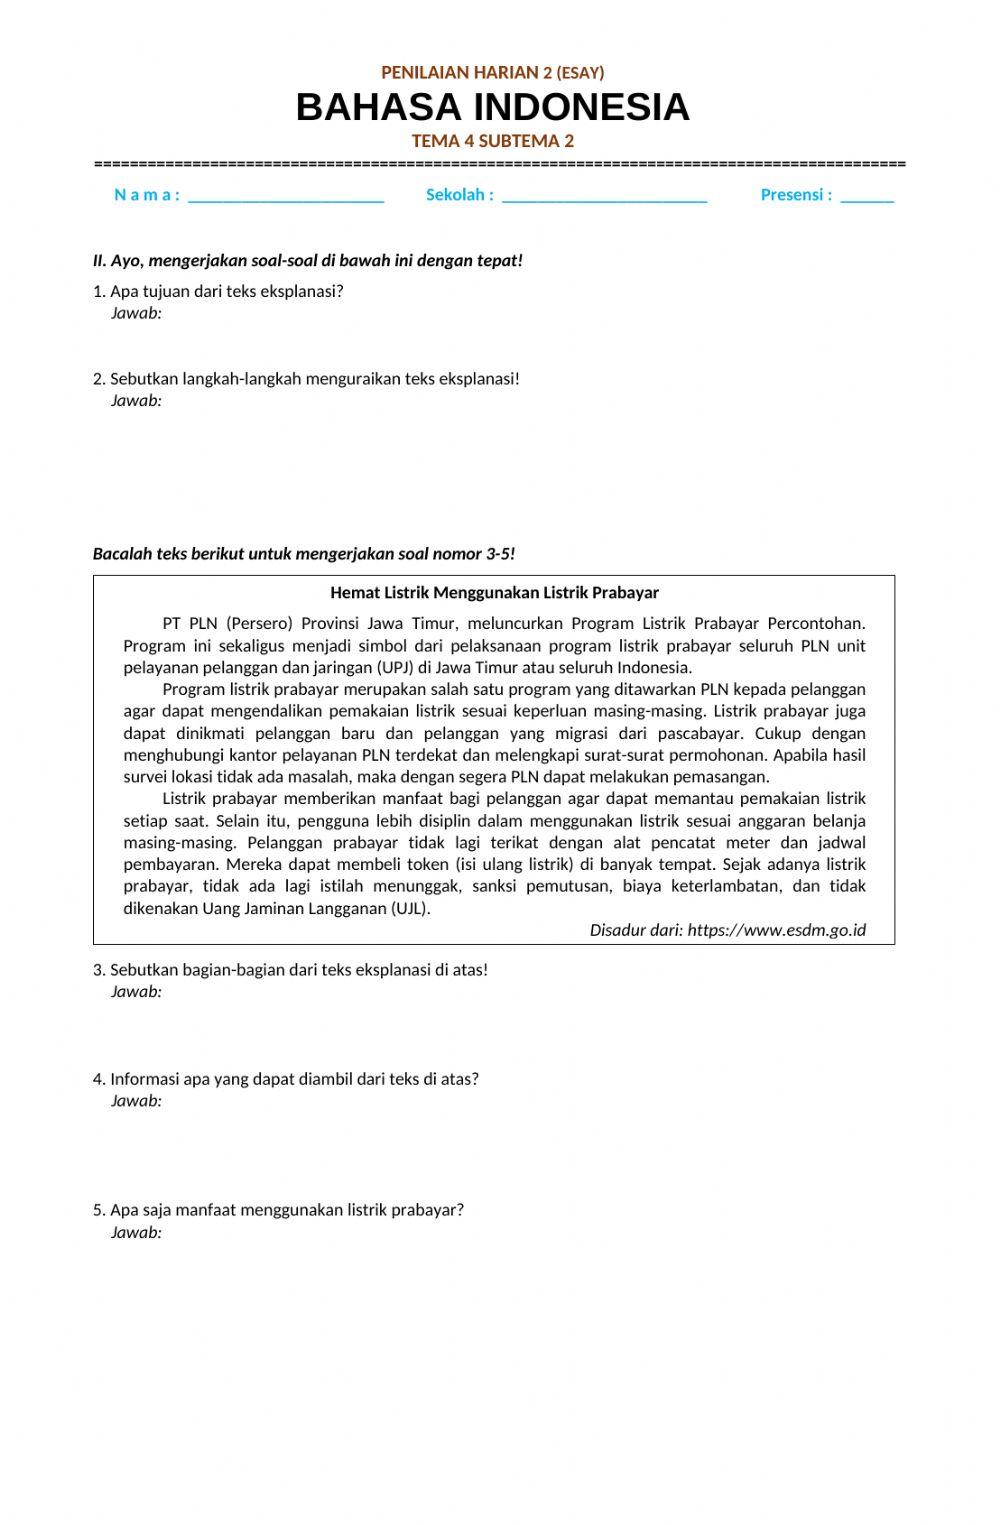 Penilaian Harian 2 Bahasa Indonesia Tema 4 Subtema 2